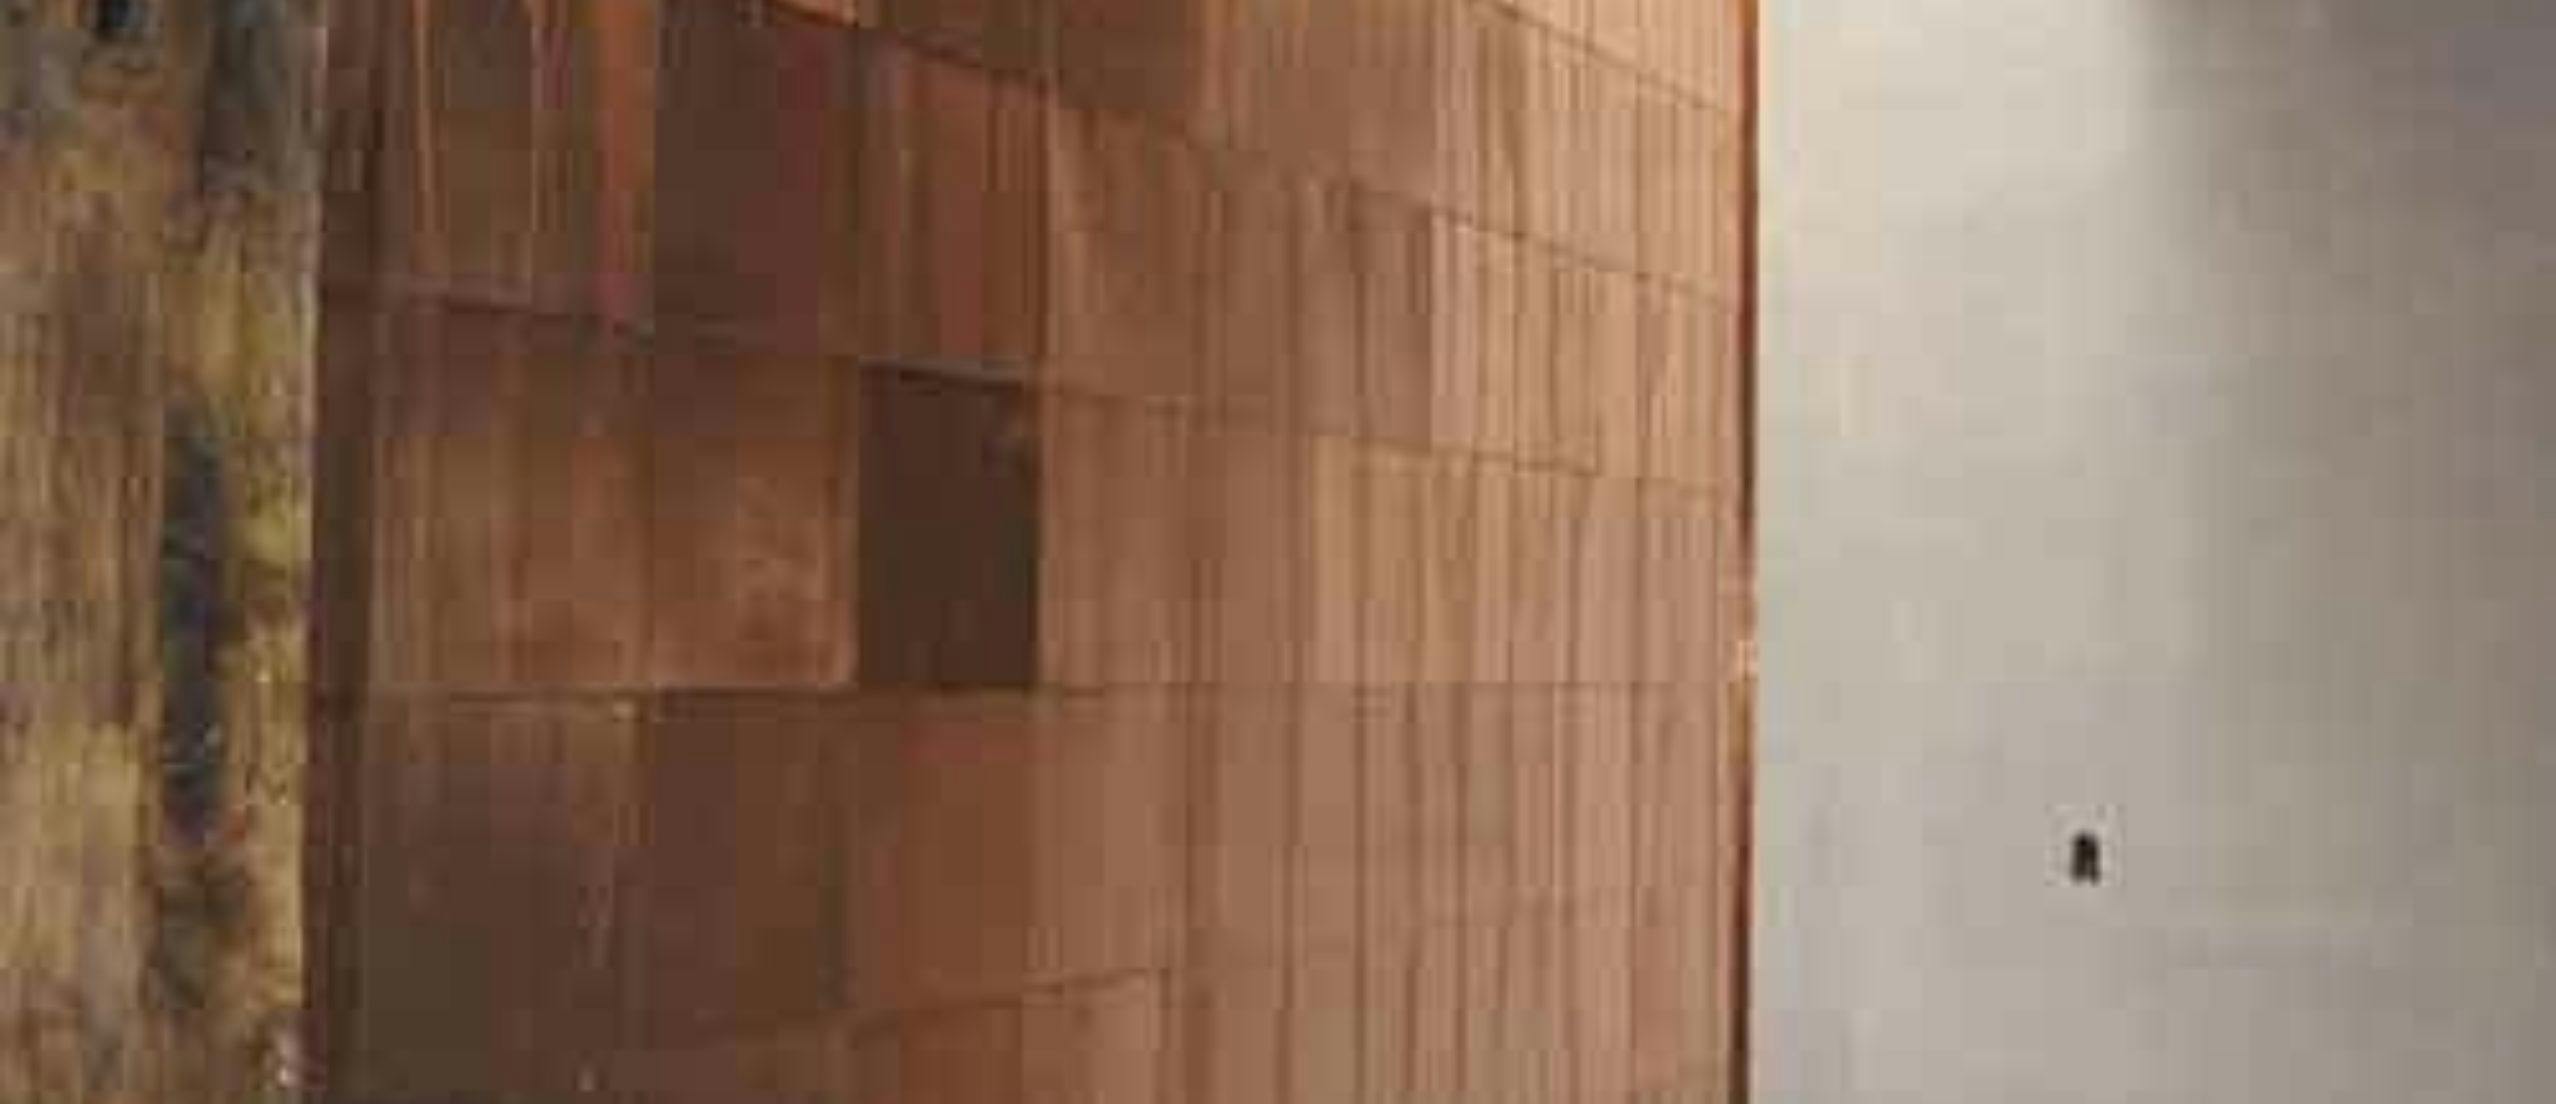 Copper wall interior waterfall for interior decorating ideas leeblackwellstudio